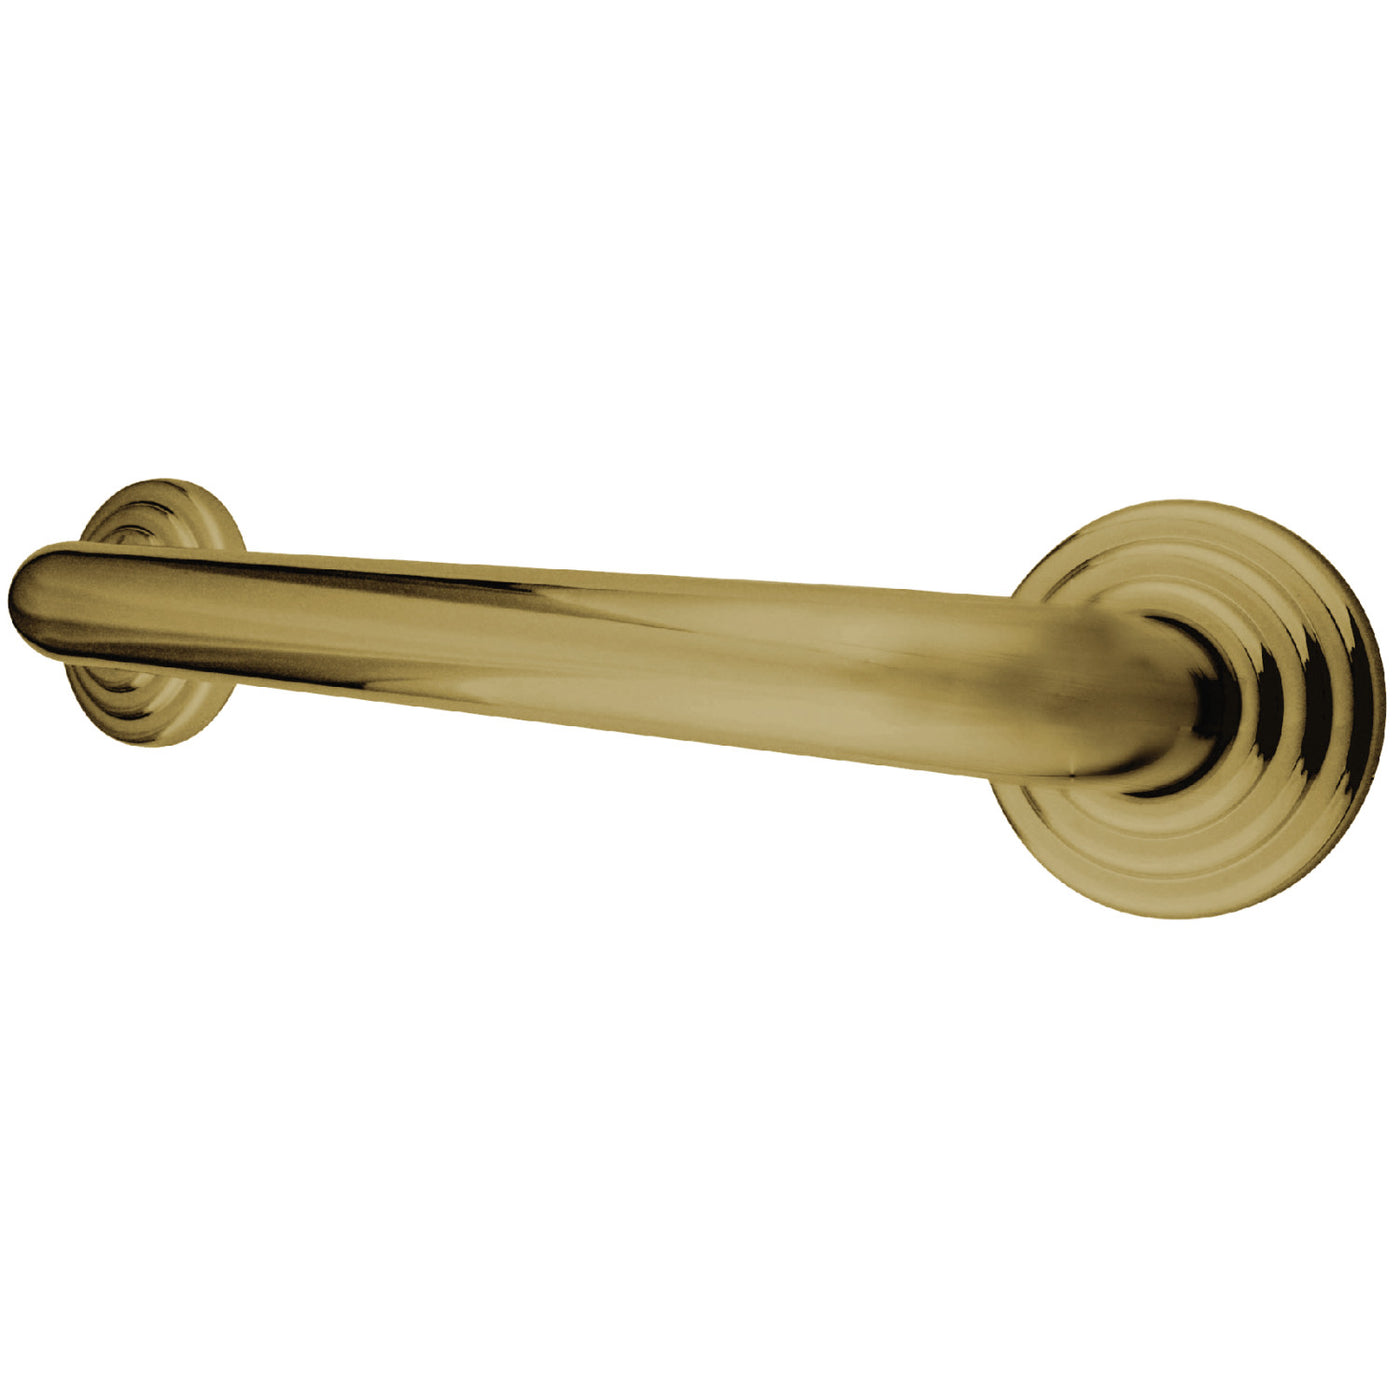 Elements of Design EDR314322 32-Inch x 1-1/4-Inch O.D Grab Bar, Polished Brass